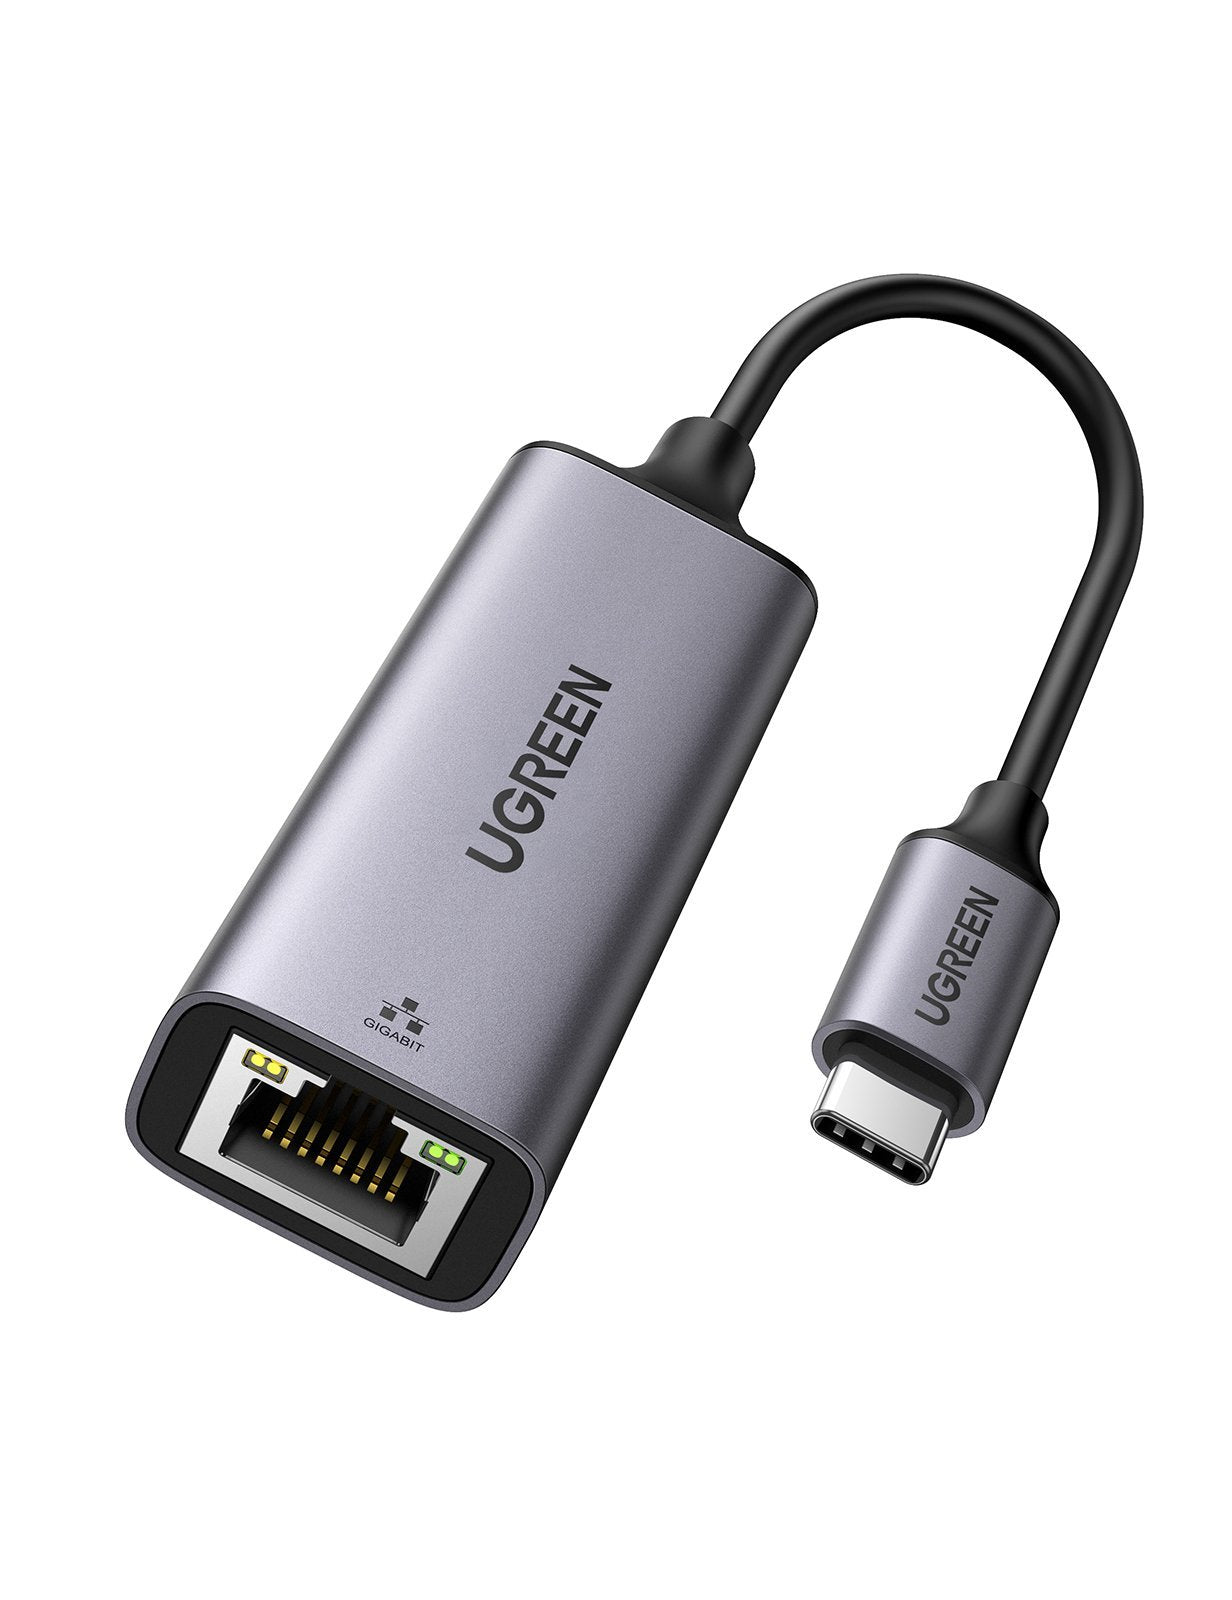 Adaptateur Ugreen Aliminium USB 3.0 vers RJ45 Ethernet gigabit (50922) prix  Maroc